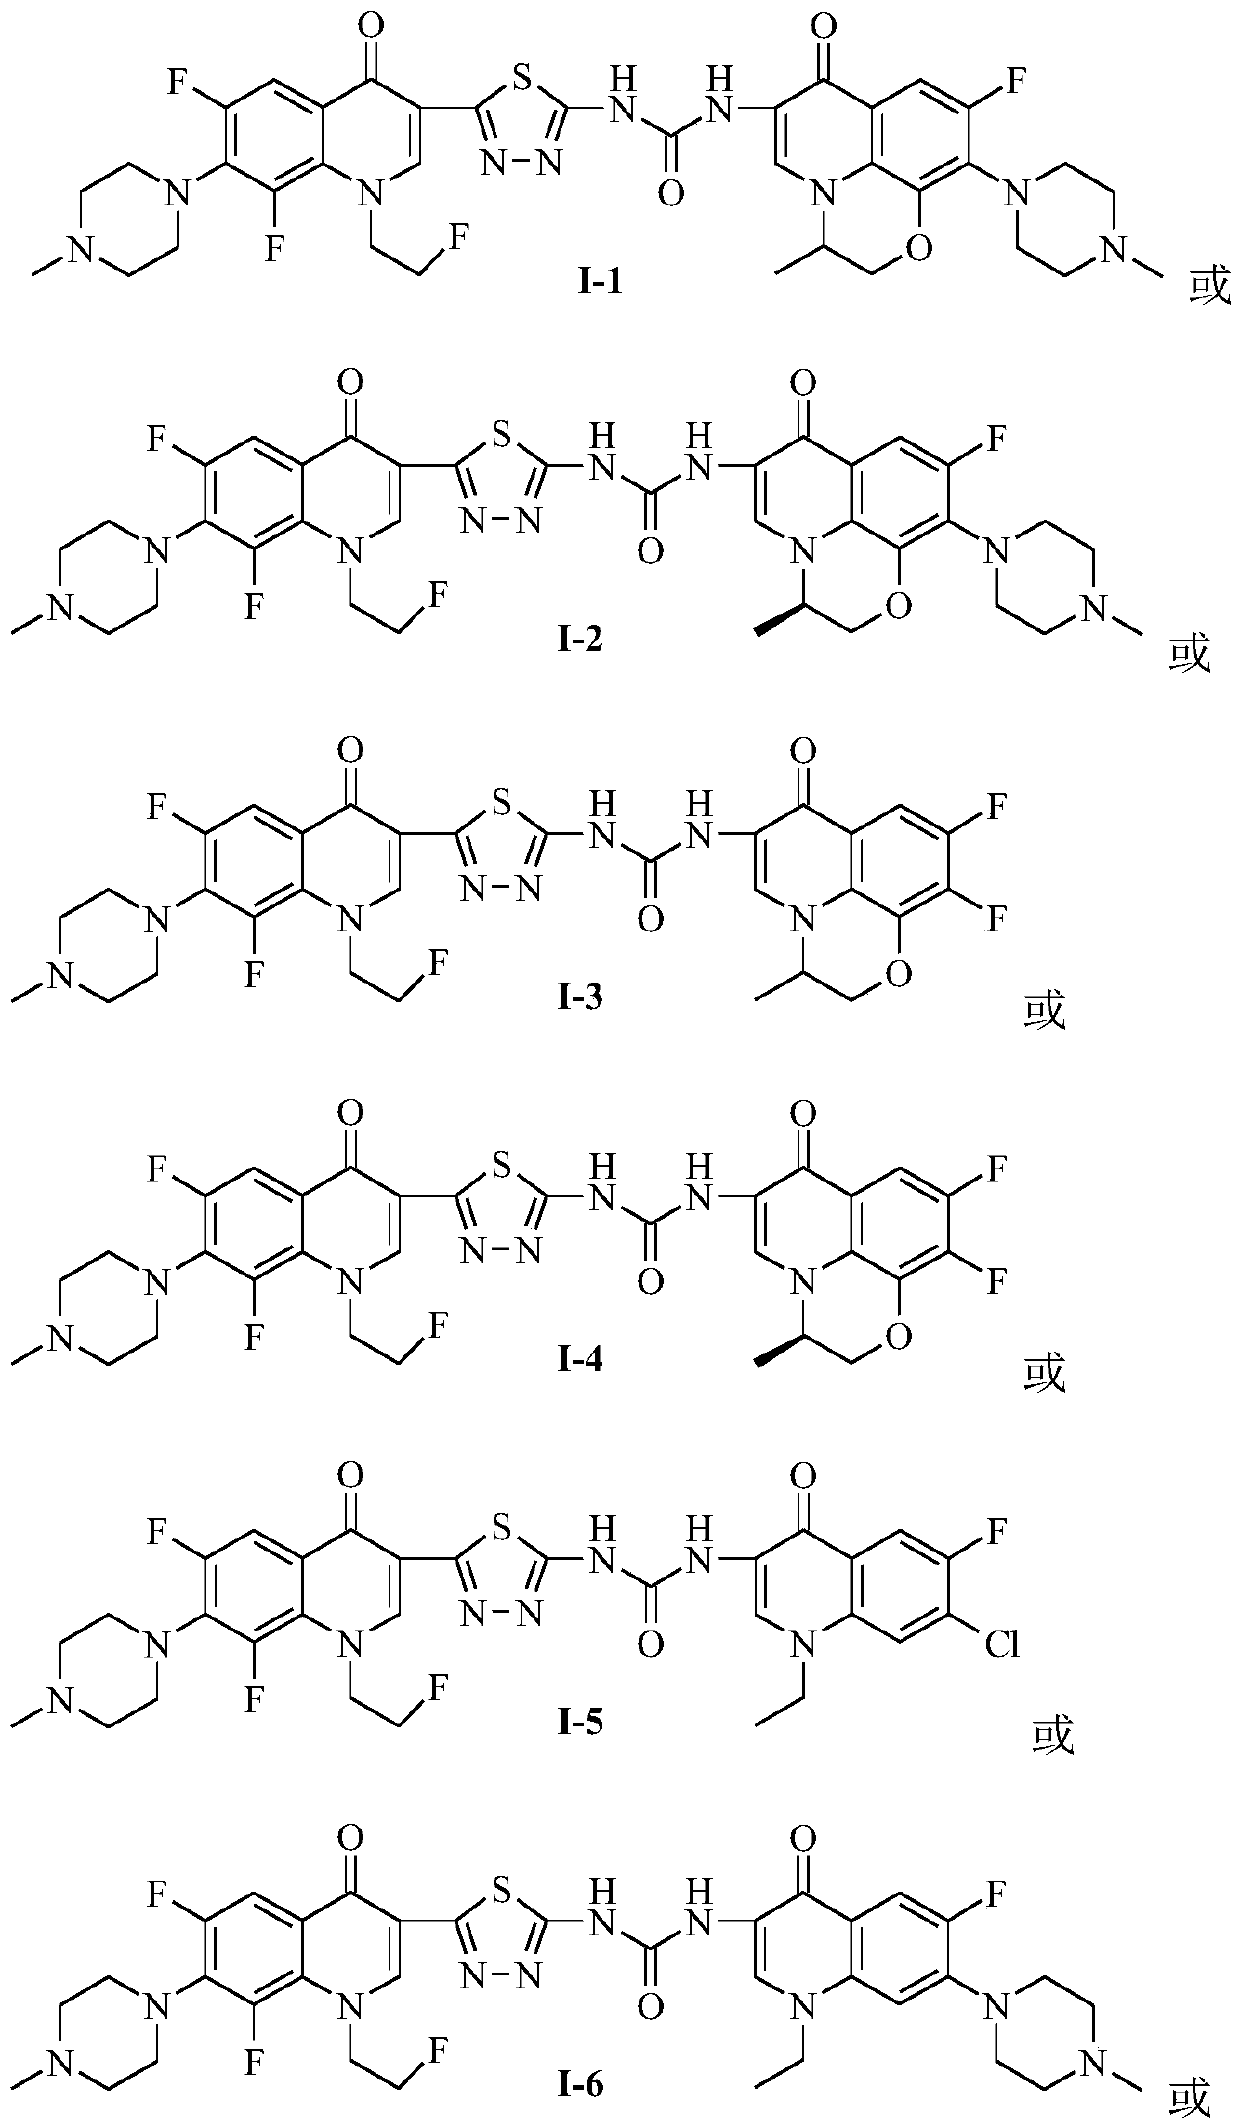 Preparation and application of bis-fluoroquinolone thiadiazole urea fleroxacin derivatives